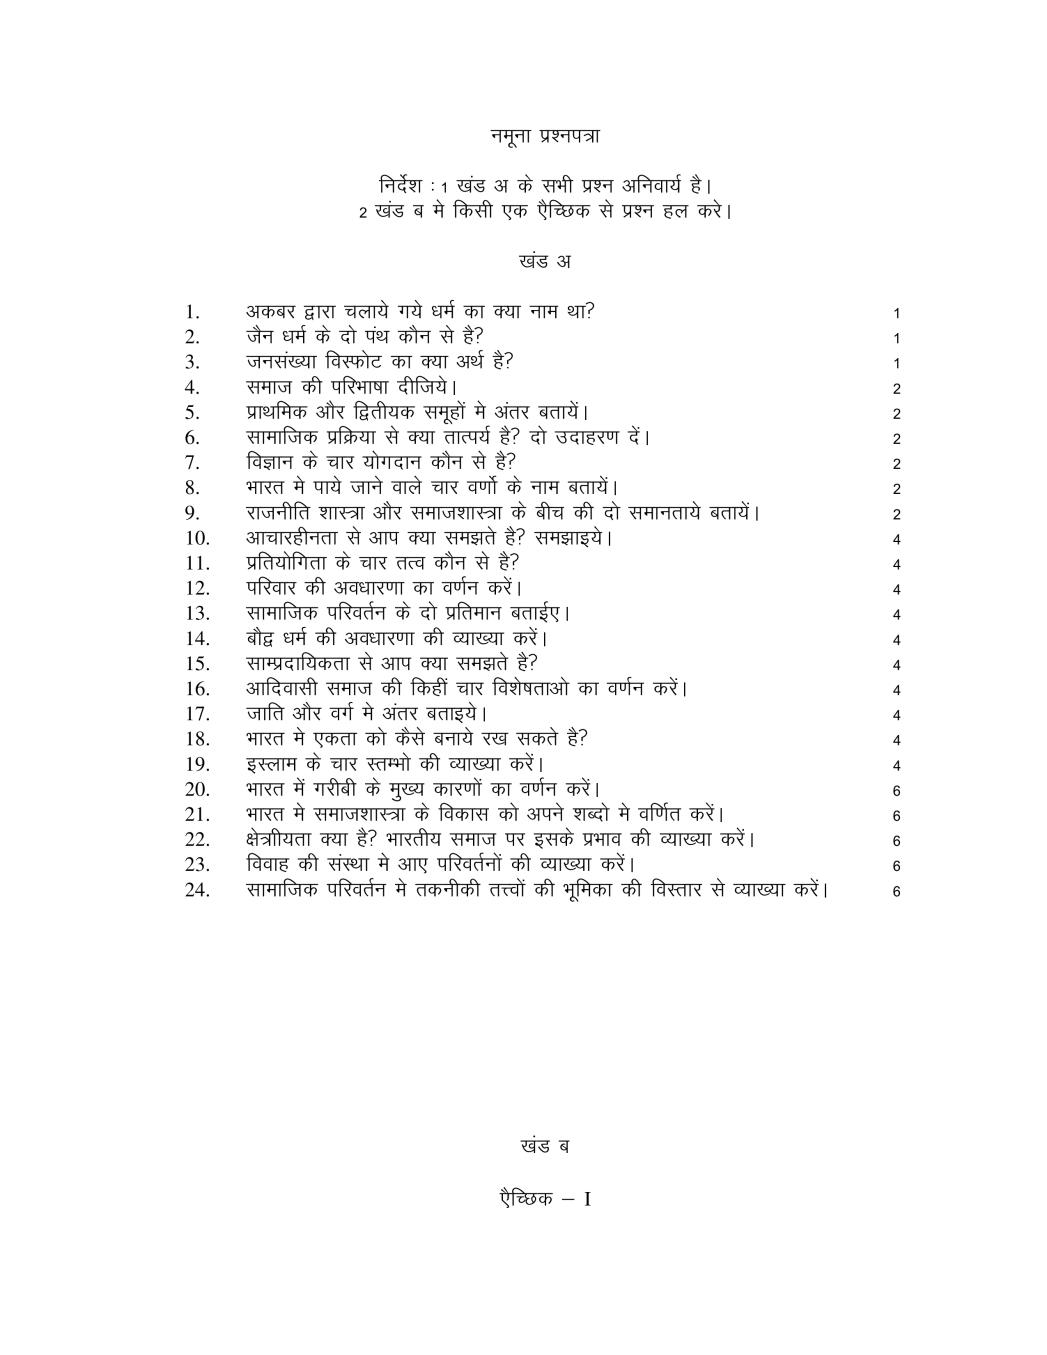 NIOS Class 12 Sample Paper 2020 - Sociology (Hindi Medium) - Page 1